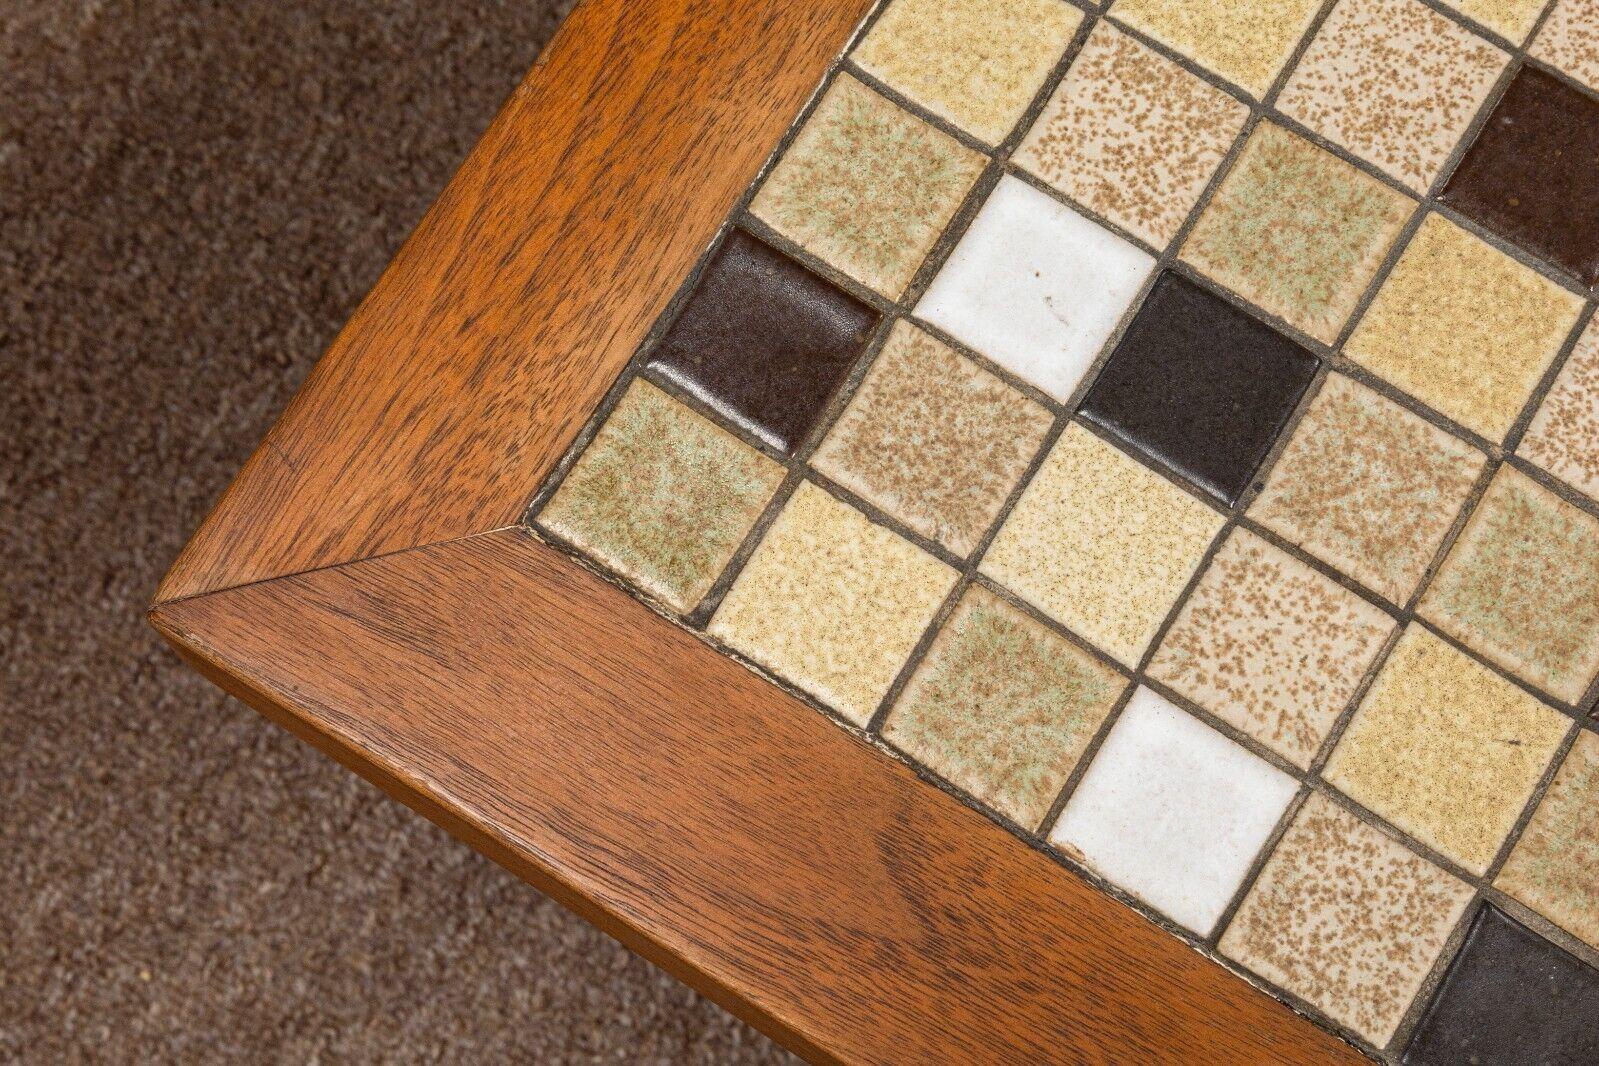 20th Century Mid Century Modern Marshall Studios Martz Tile and Wood Rectangular Coffee Table